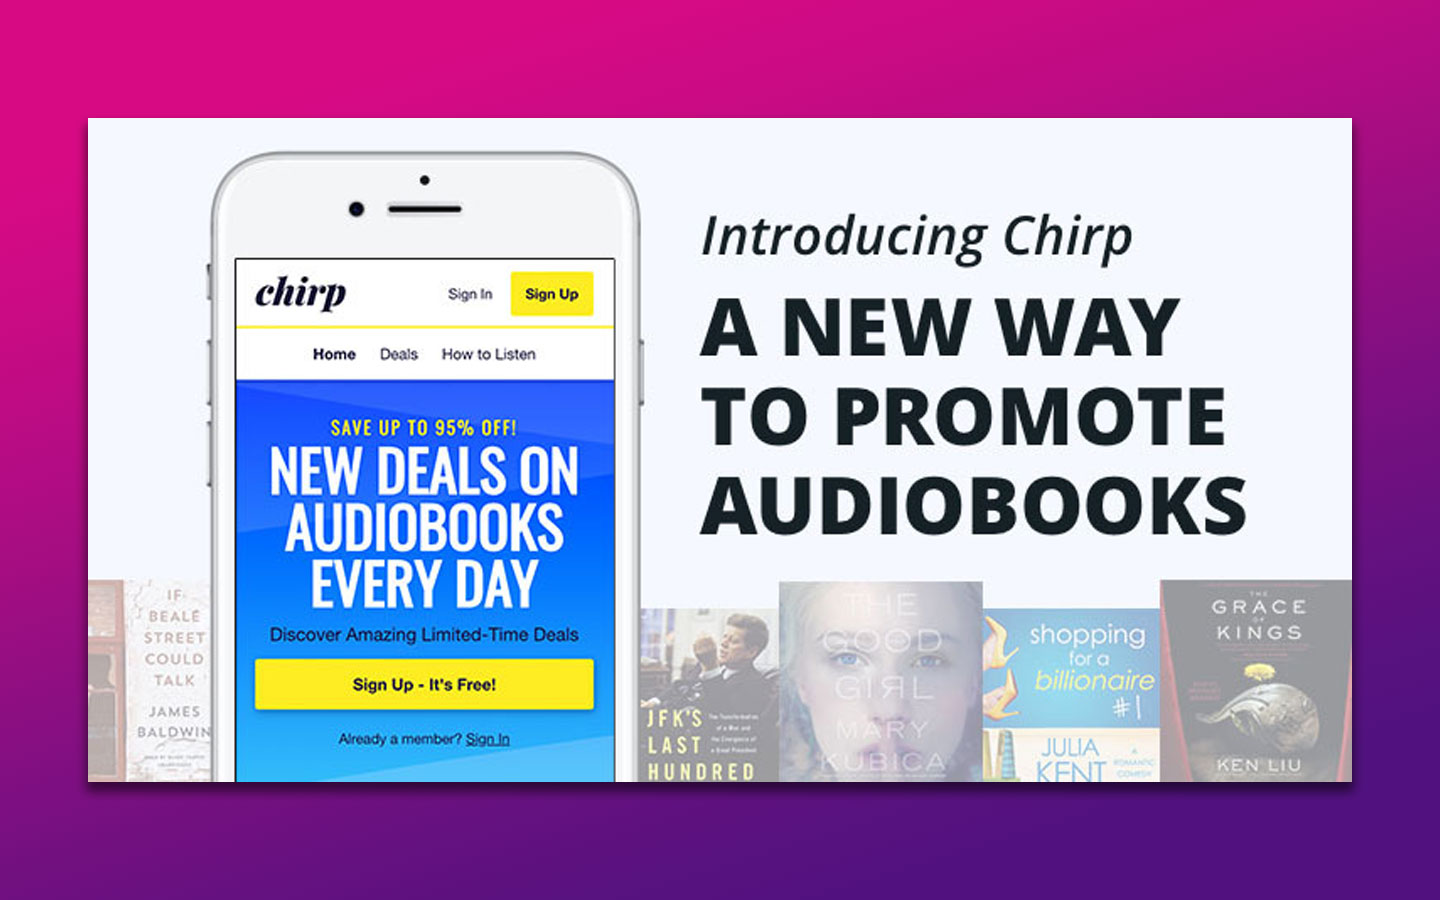 iPhone’s Chirp Audiobook App